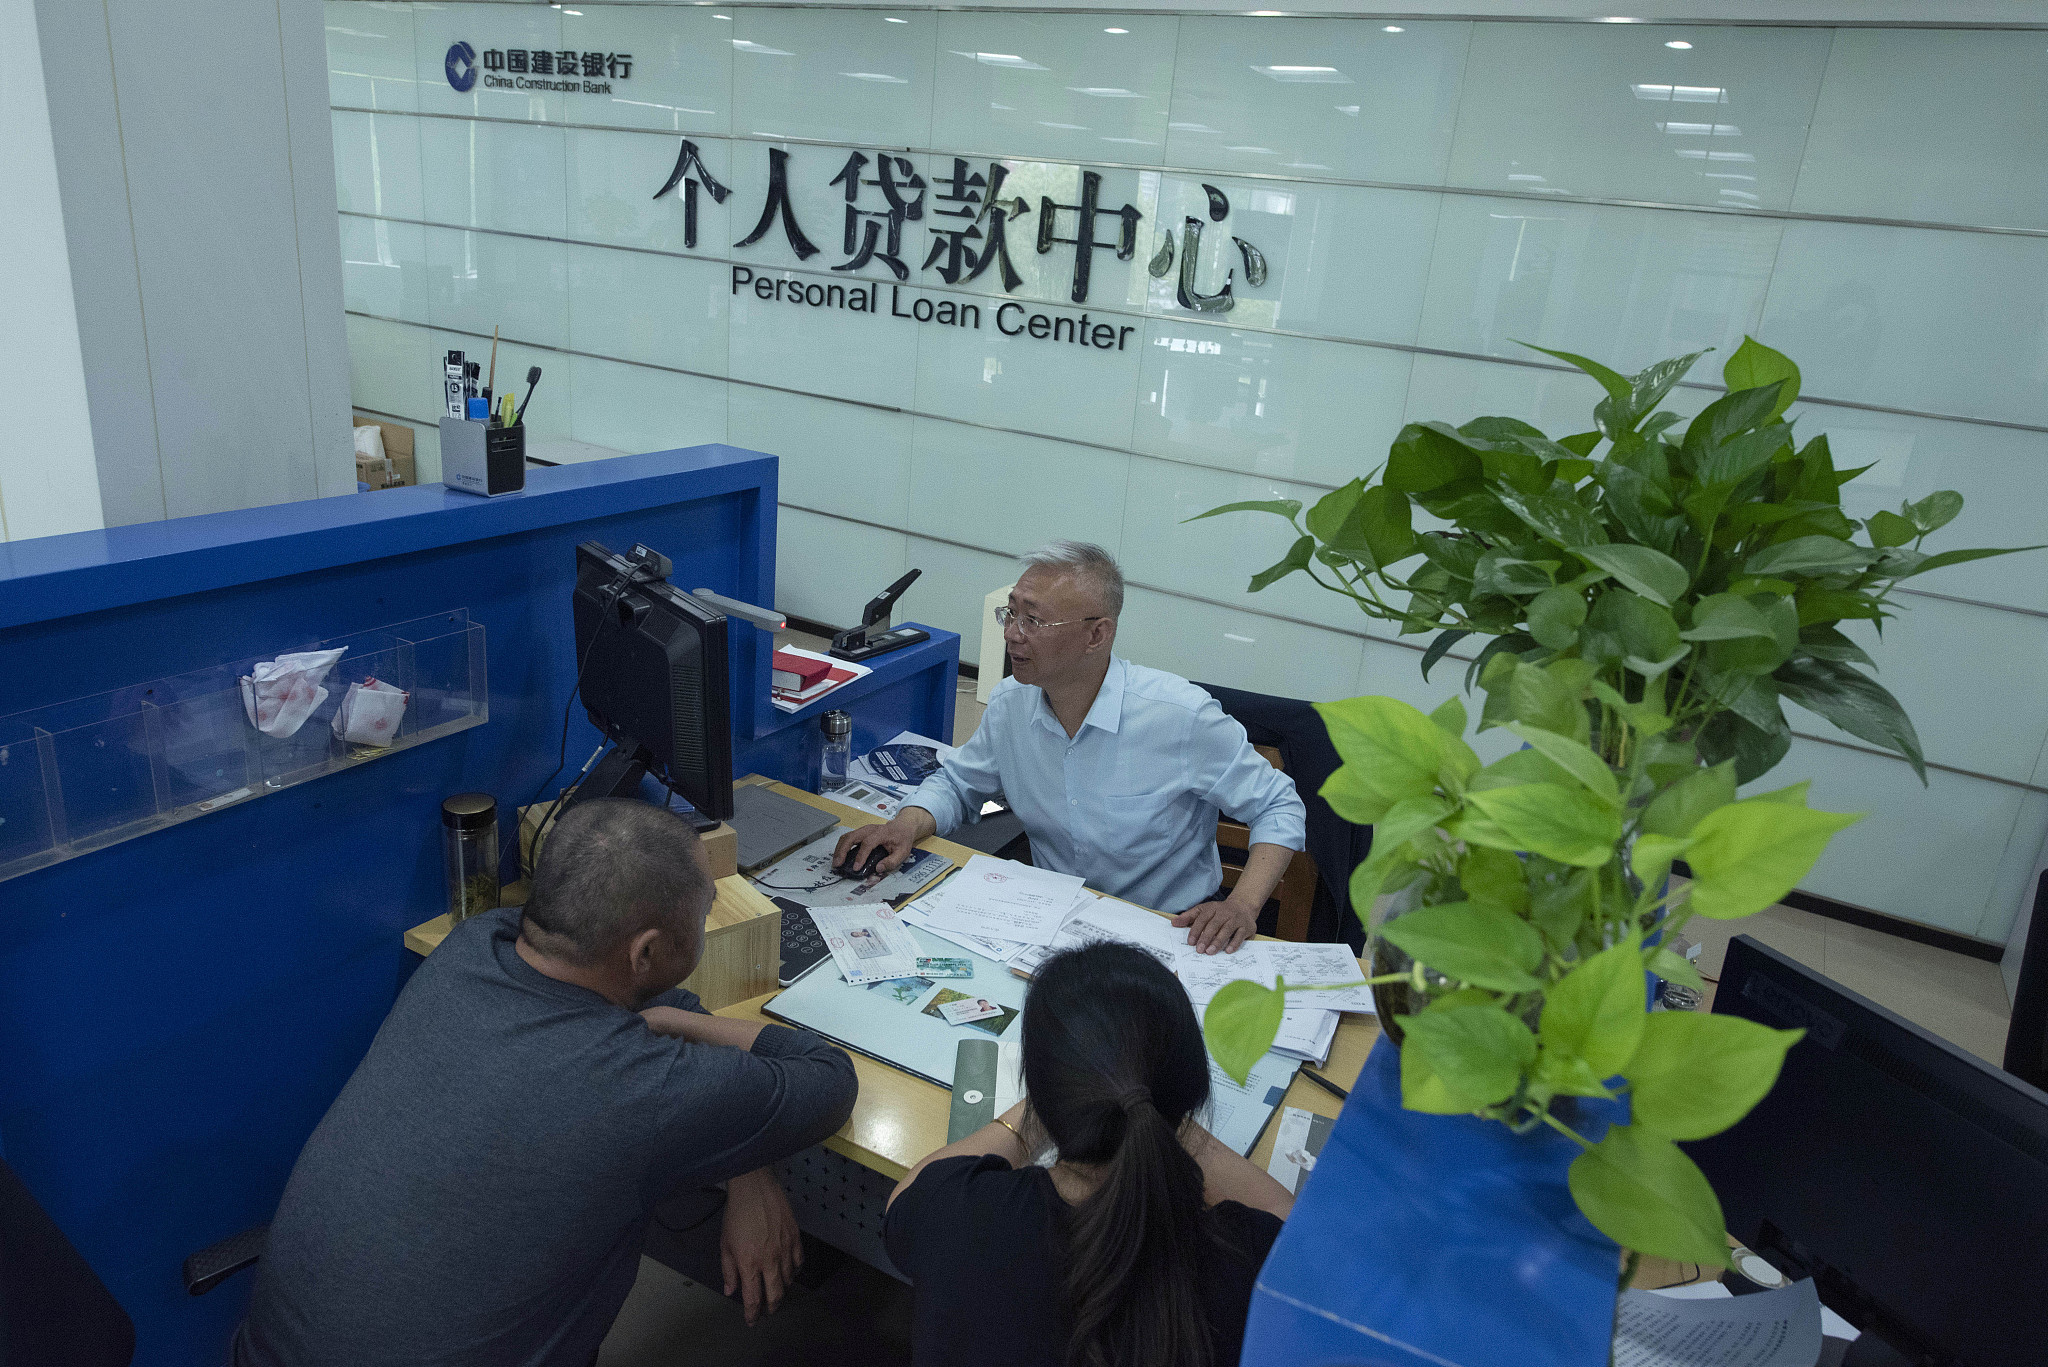 A bank clerk in Nantong, Jiangsu Province is handling individual residential housing loan business for customers on May 17. /CFP